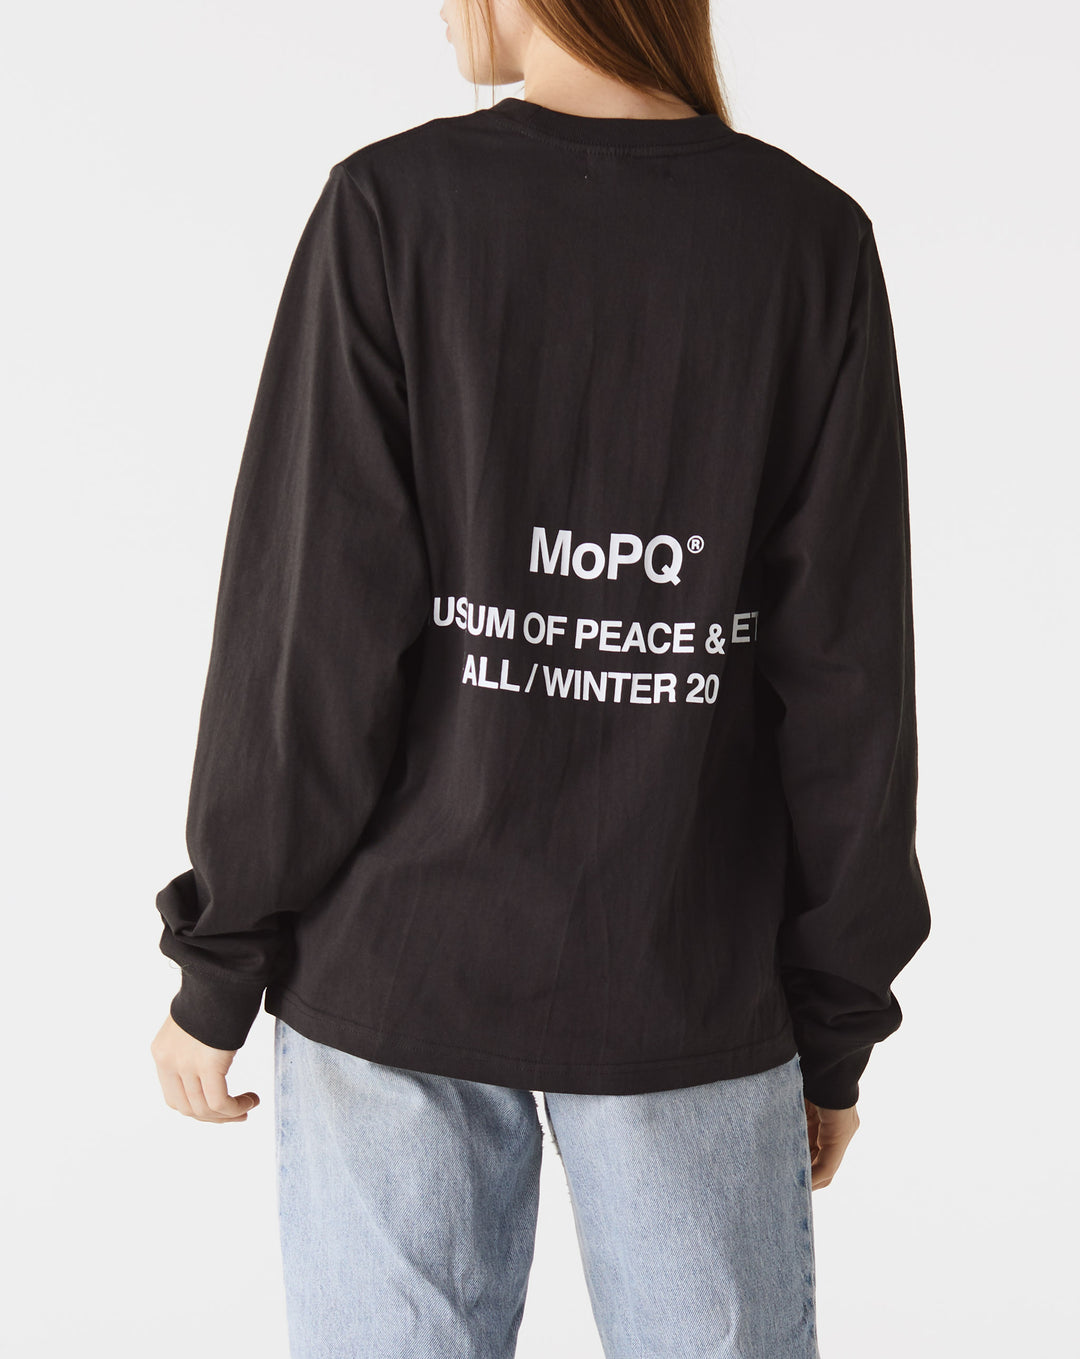 Museum of Peace & Quiet MoPQ Long Sleeve T-Shirt  - XHIBITION